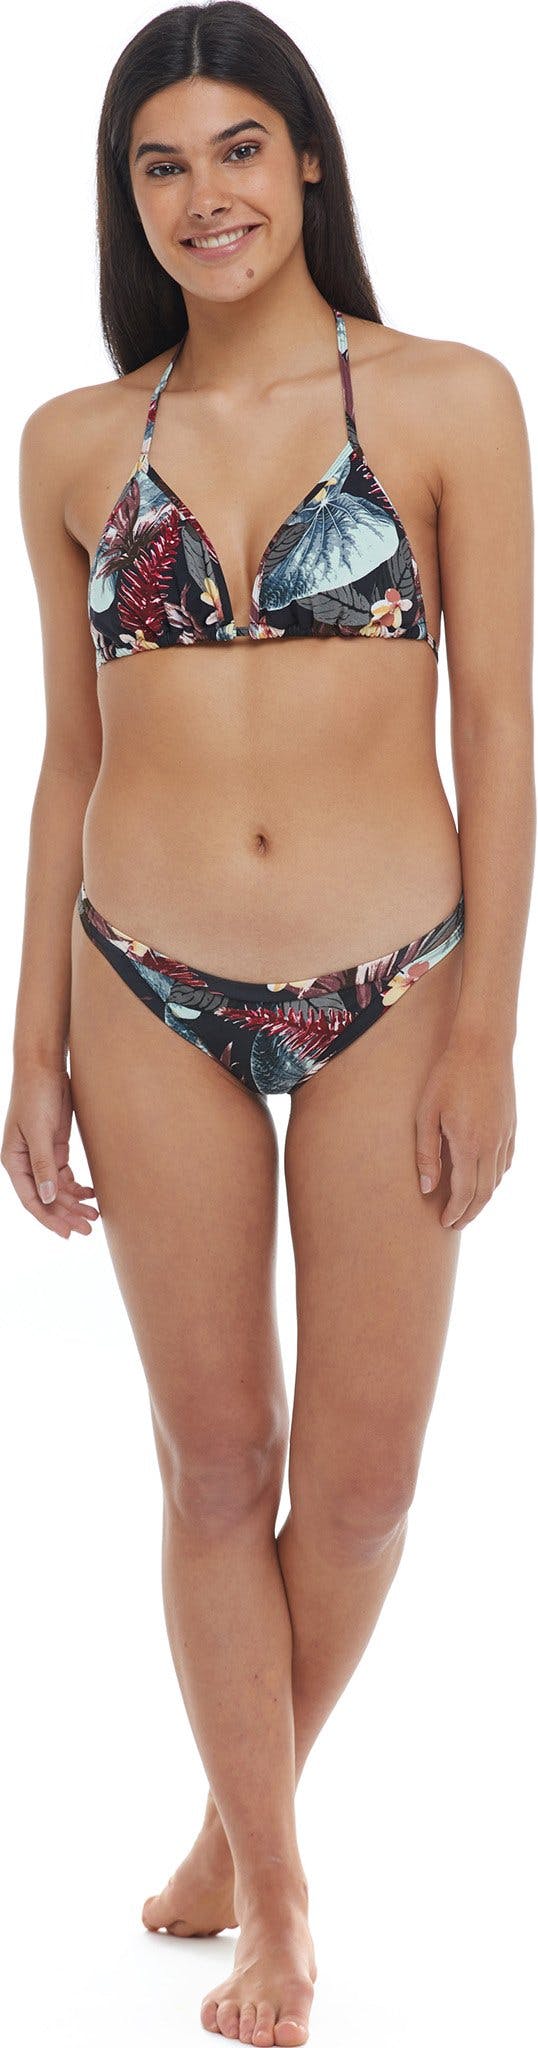 Product image for Flourish Eco-Conscious Connor Bikini Bottom- Spice - Women’S